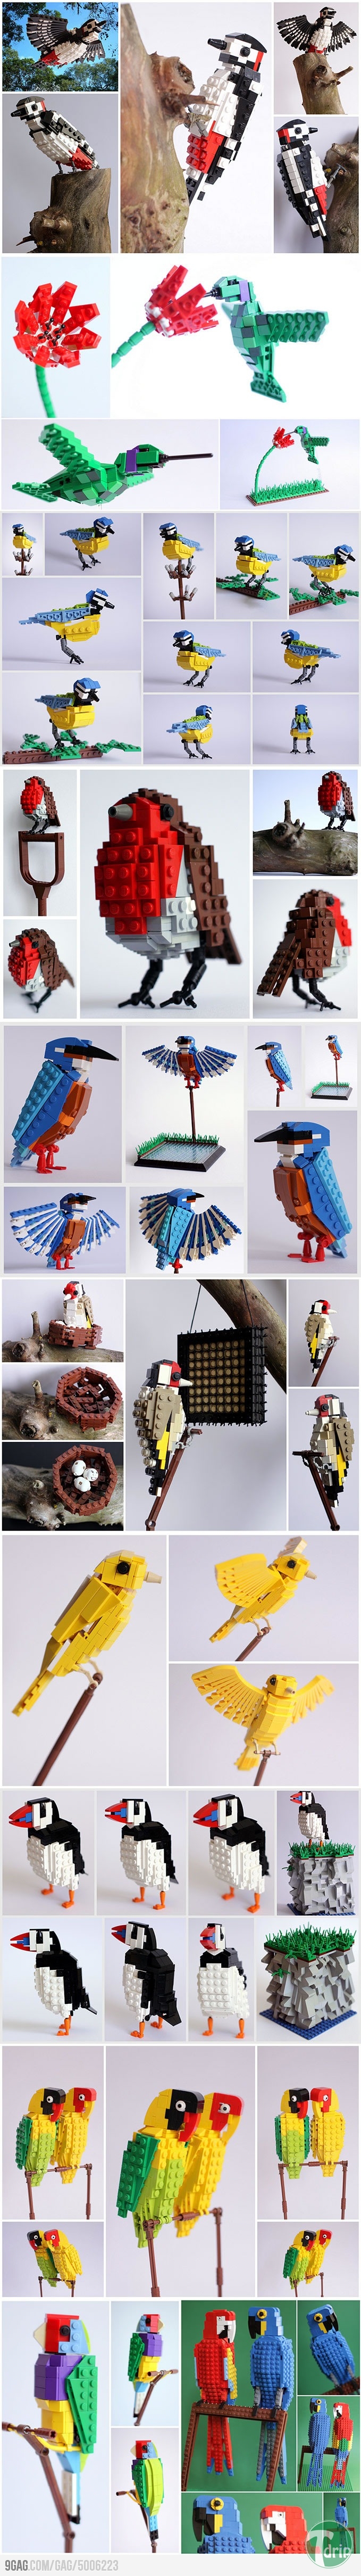 5006223_700b_v1 (1).jpg : 레고로 만들어본 새.jpg